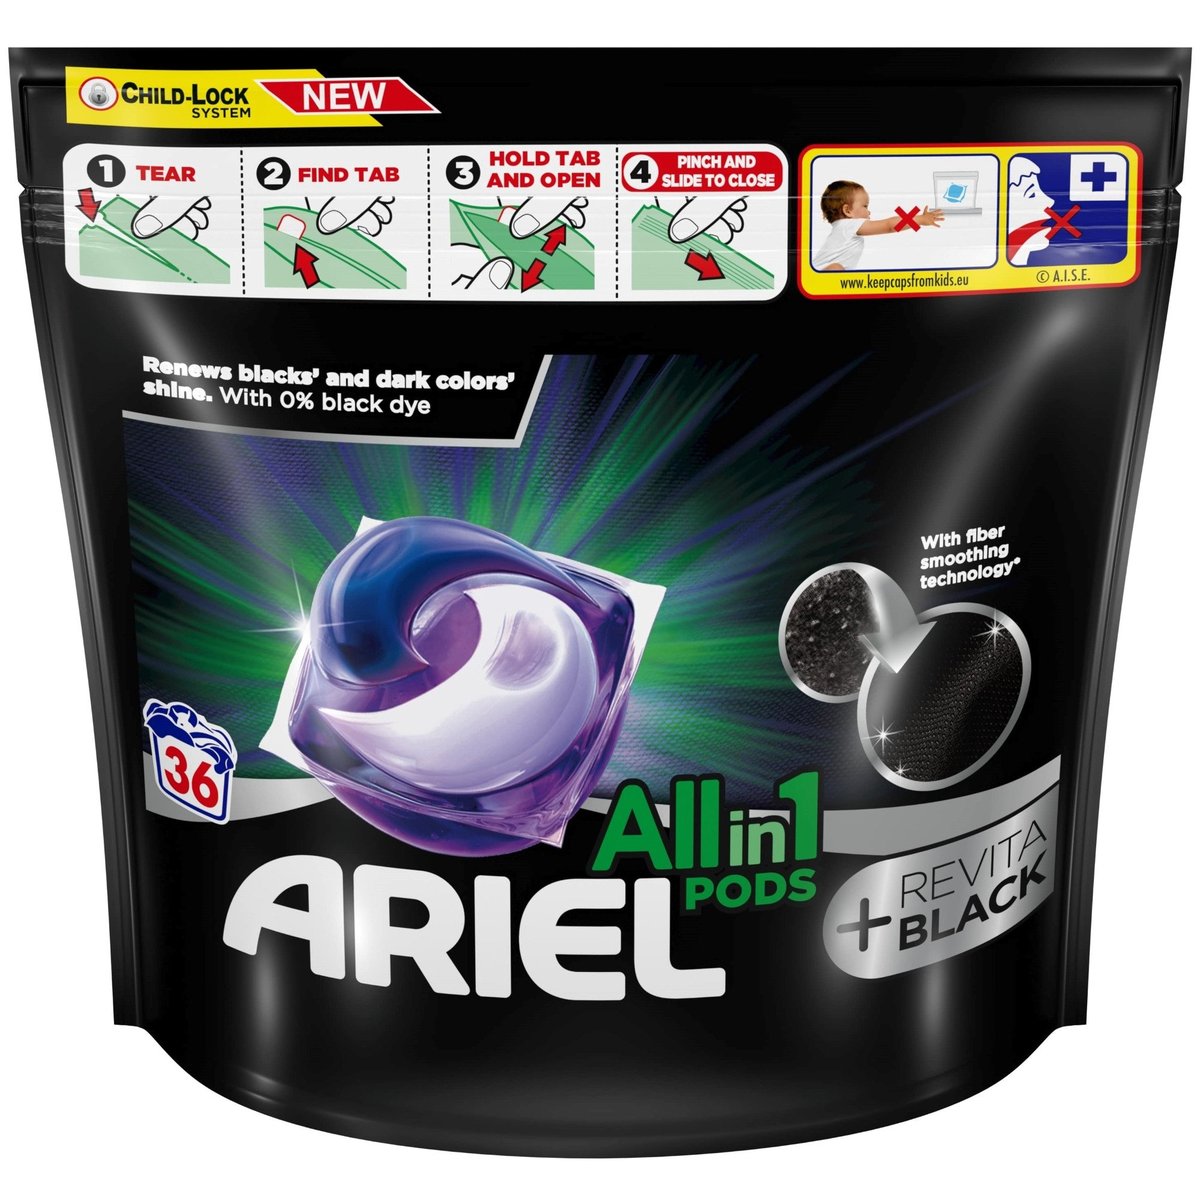 Ariel + Revitablack Allin1 kapsle na praní